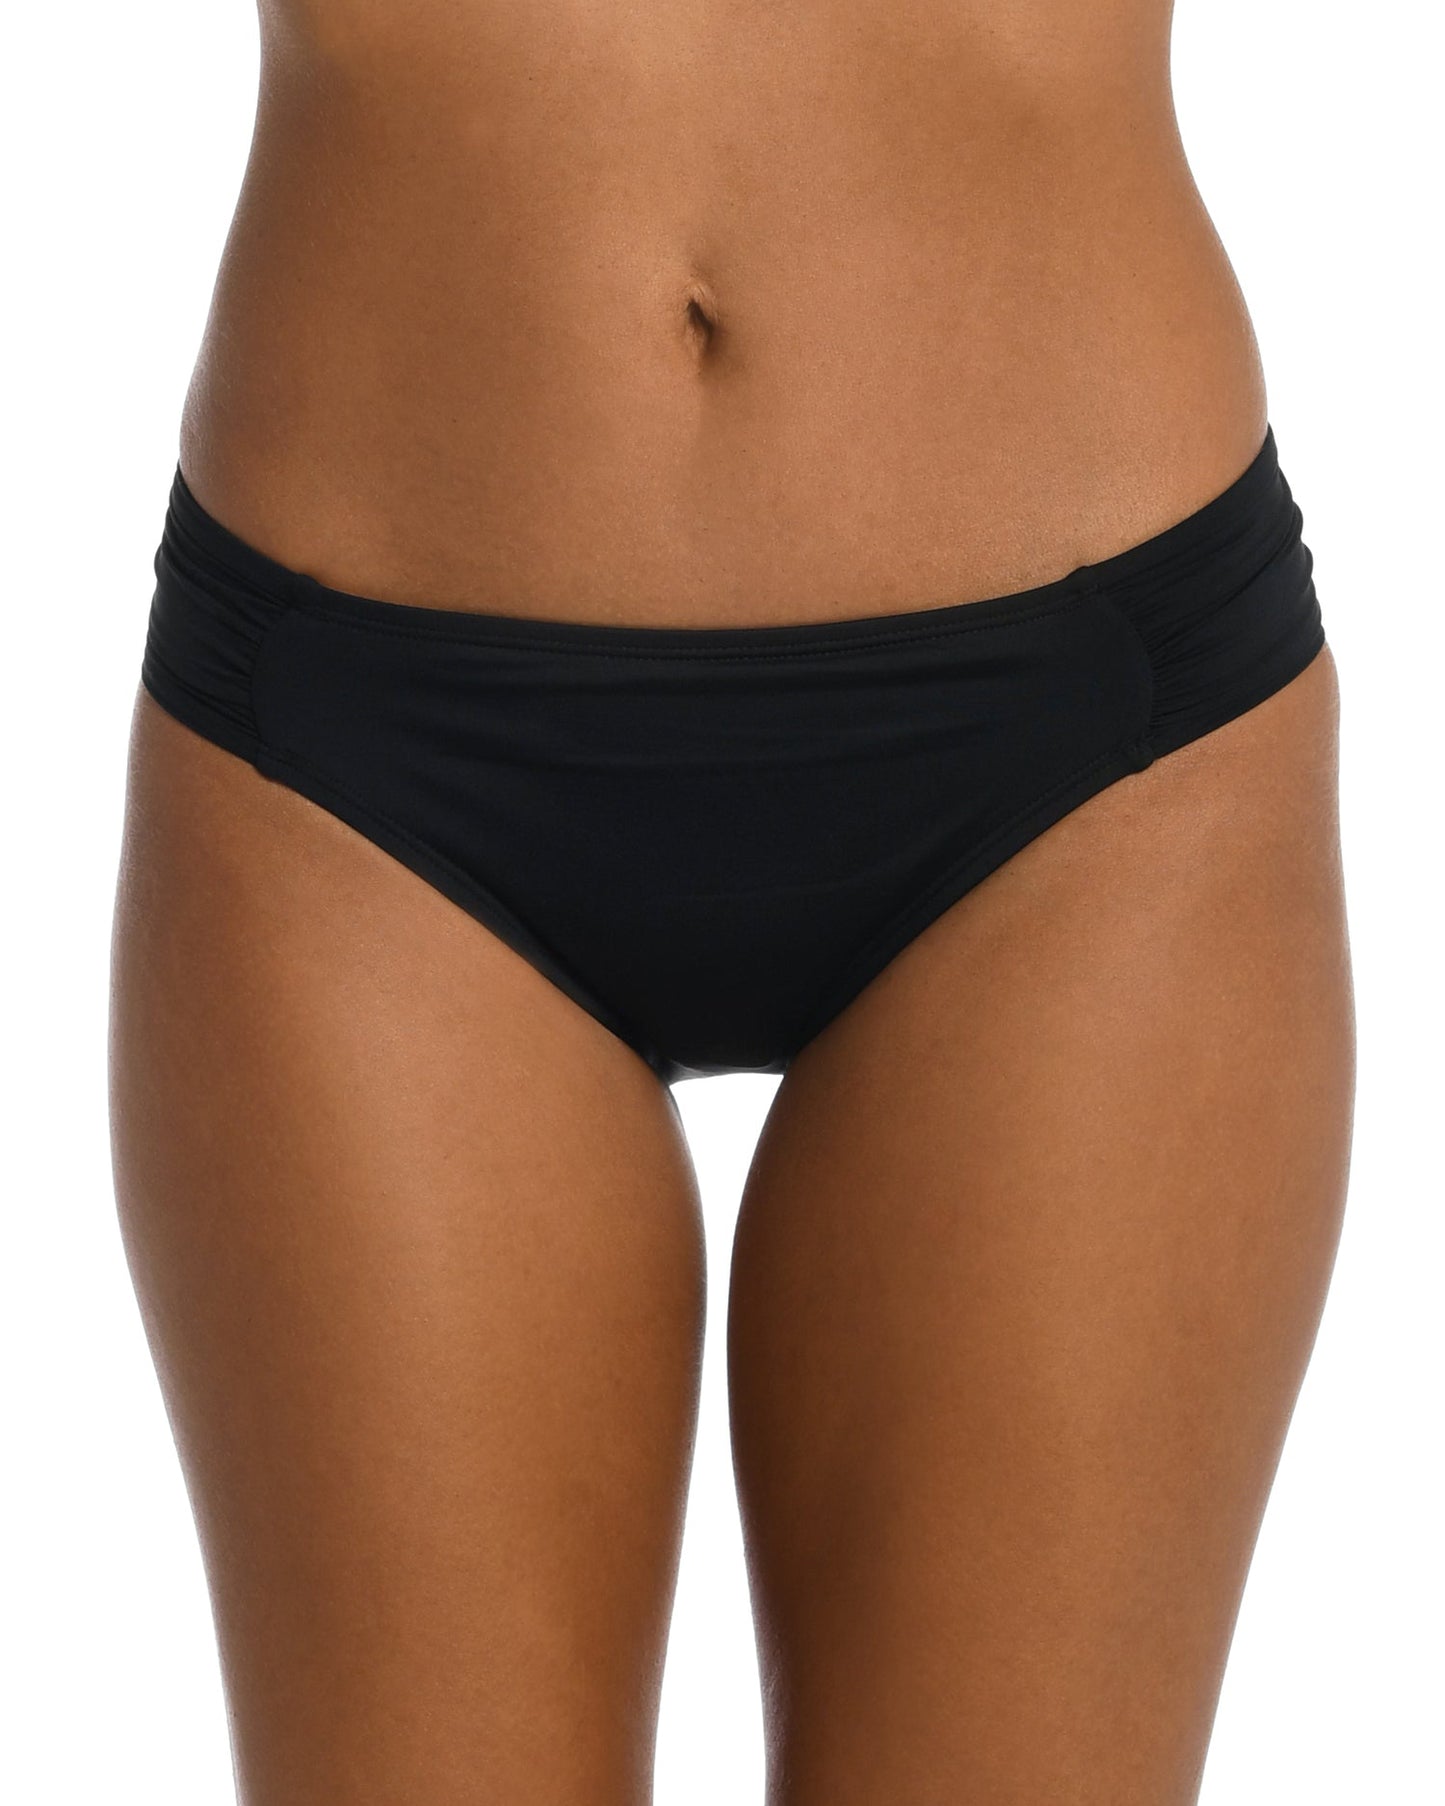 Model wearing a side shirred hipster bikini bottom in black